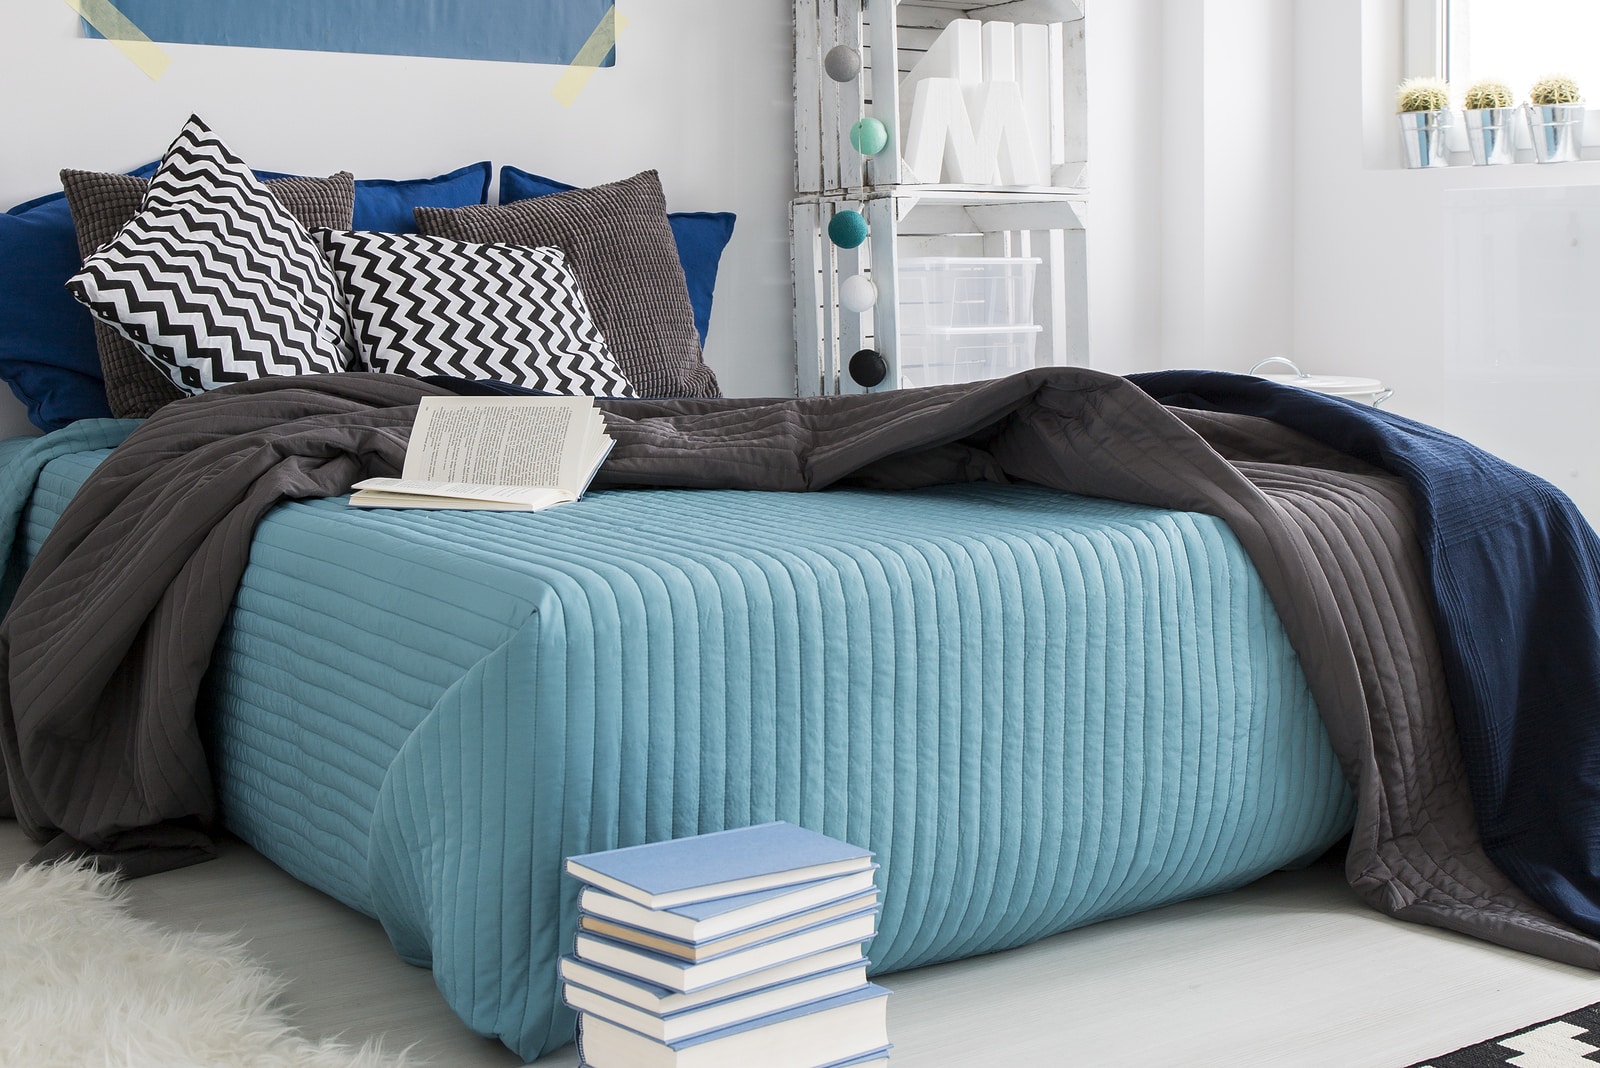 Comfortable bed in cozy modern blue bedroom